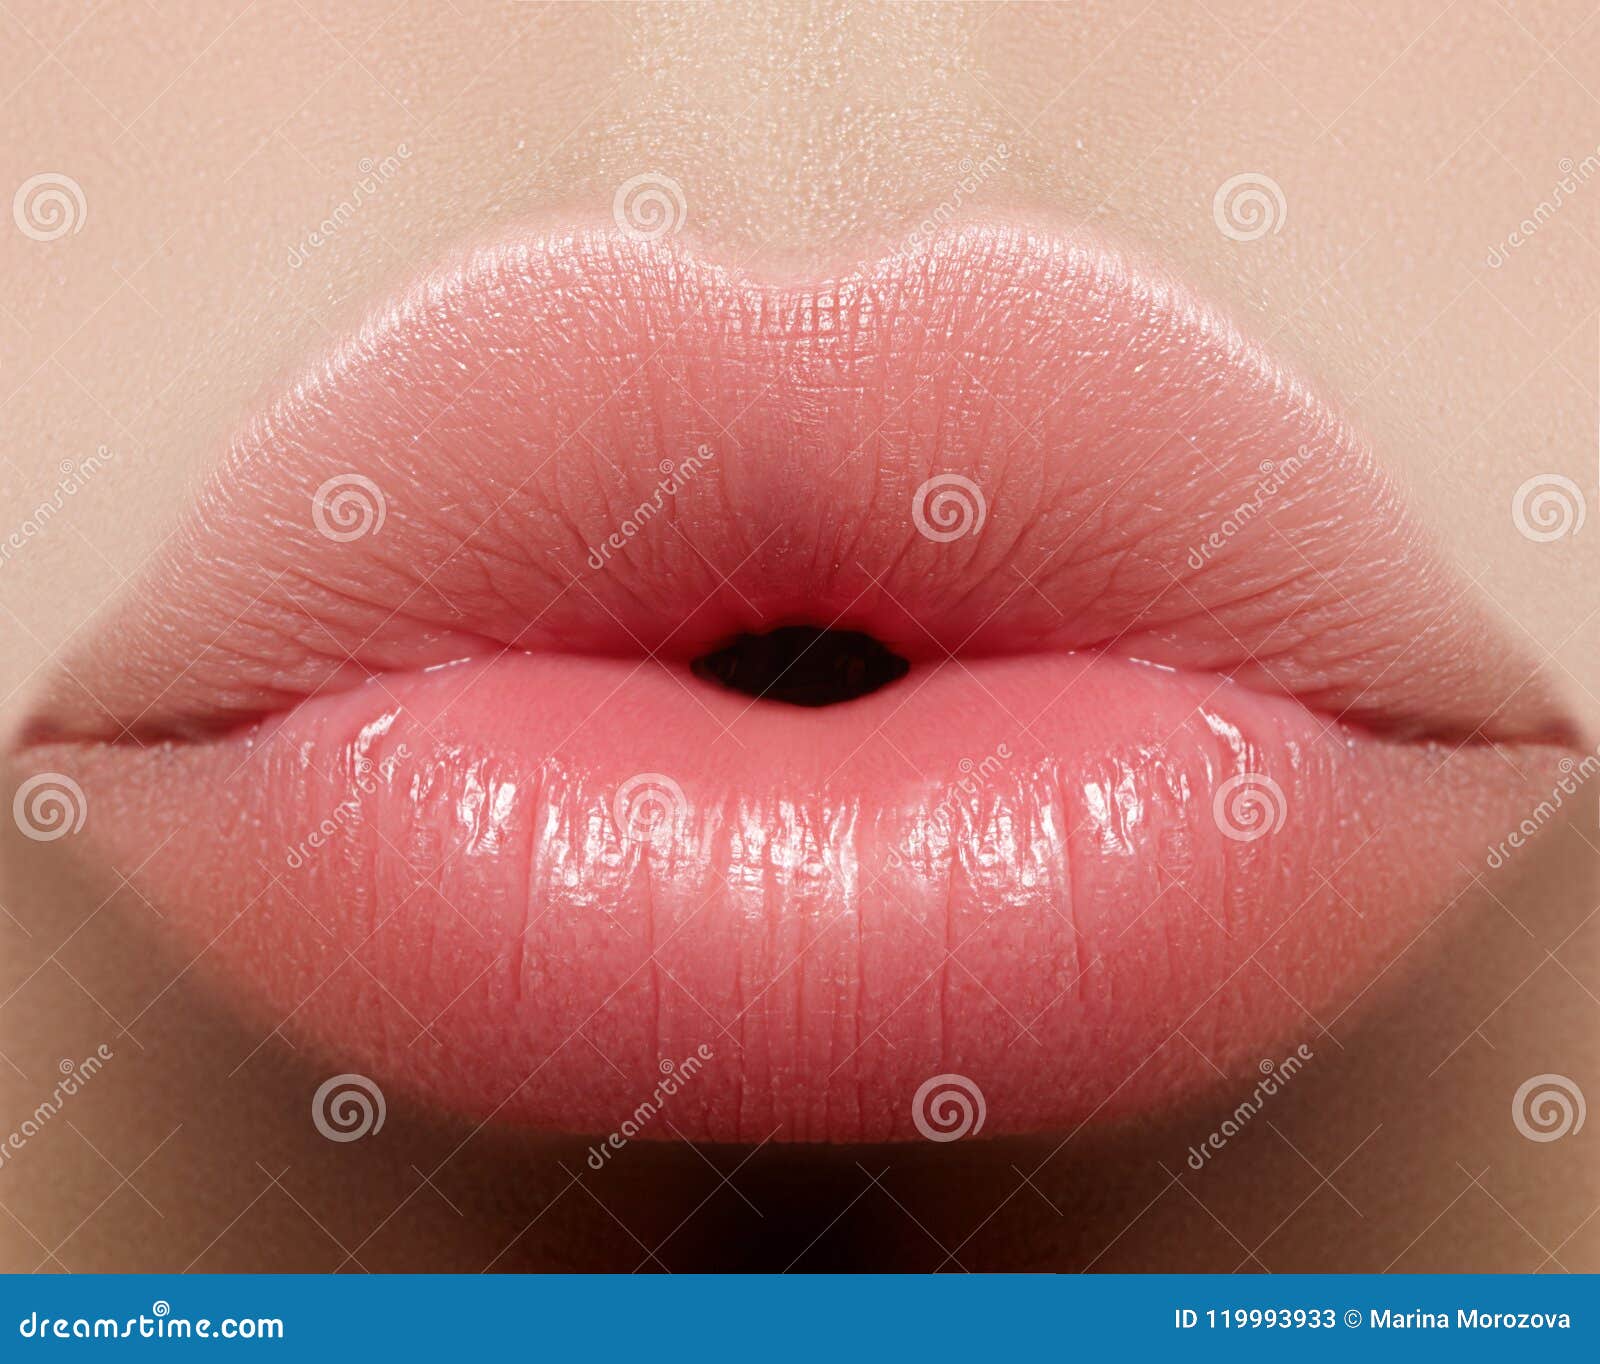 closeup kiss natural lip makeup. beautiful plump full lips on female face. clean skin, fresh make-up. spa tender lips